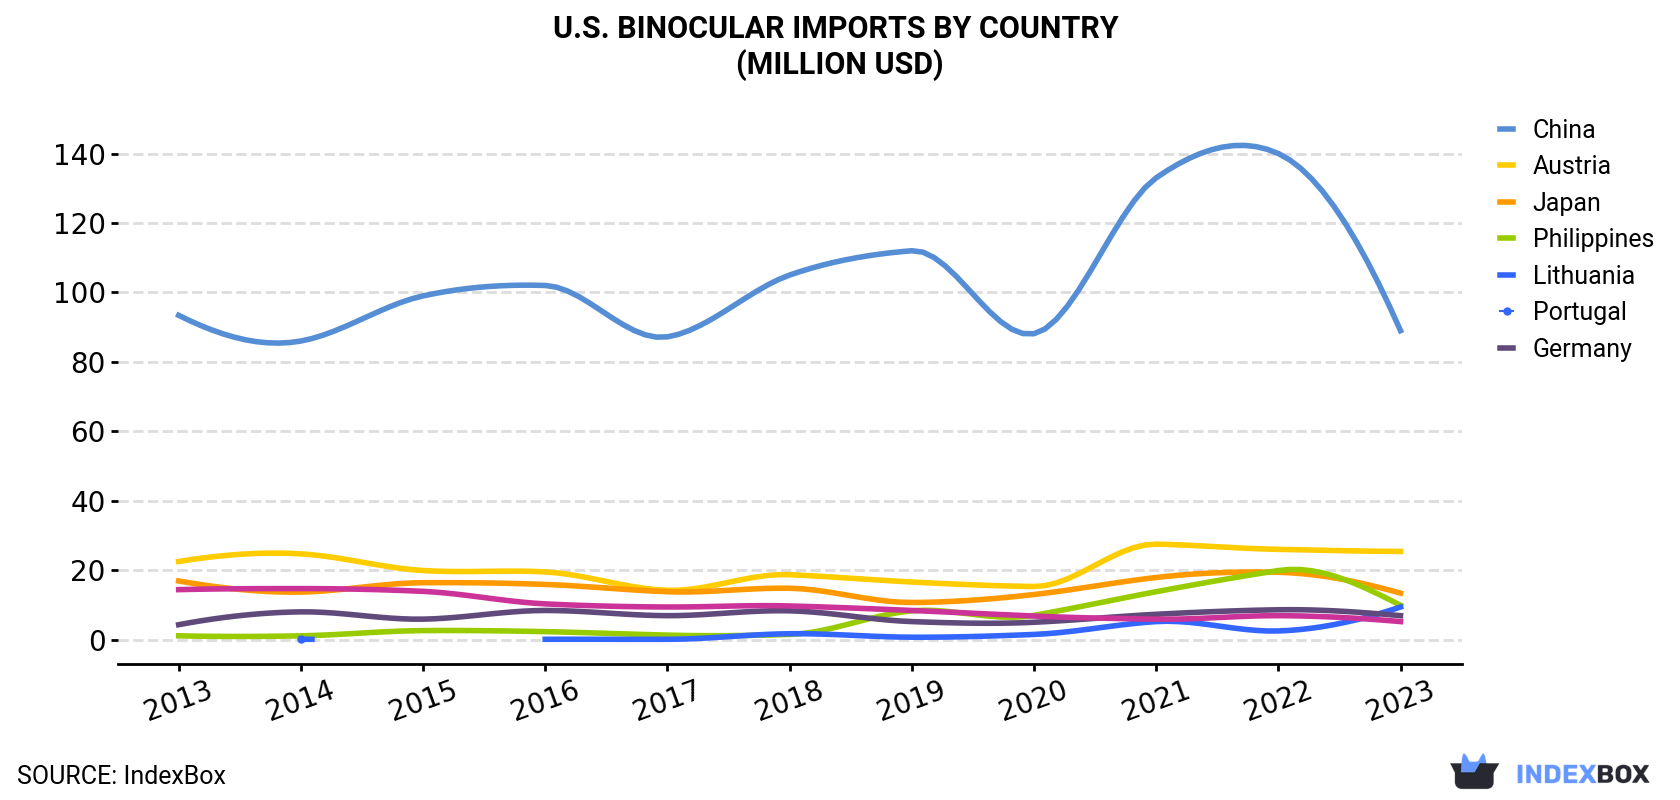 U.S. Binocular Imports By Country (Million USD)